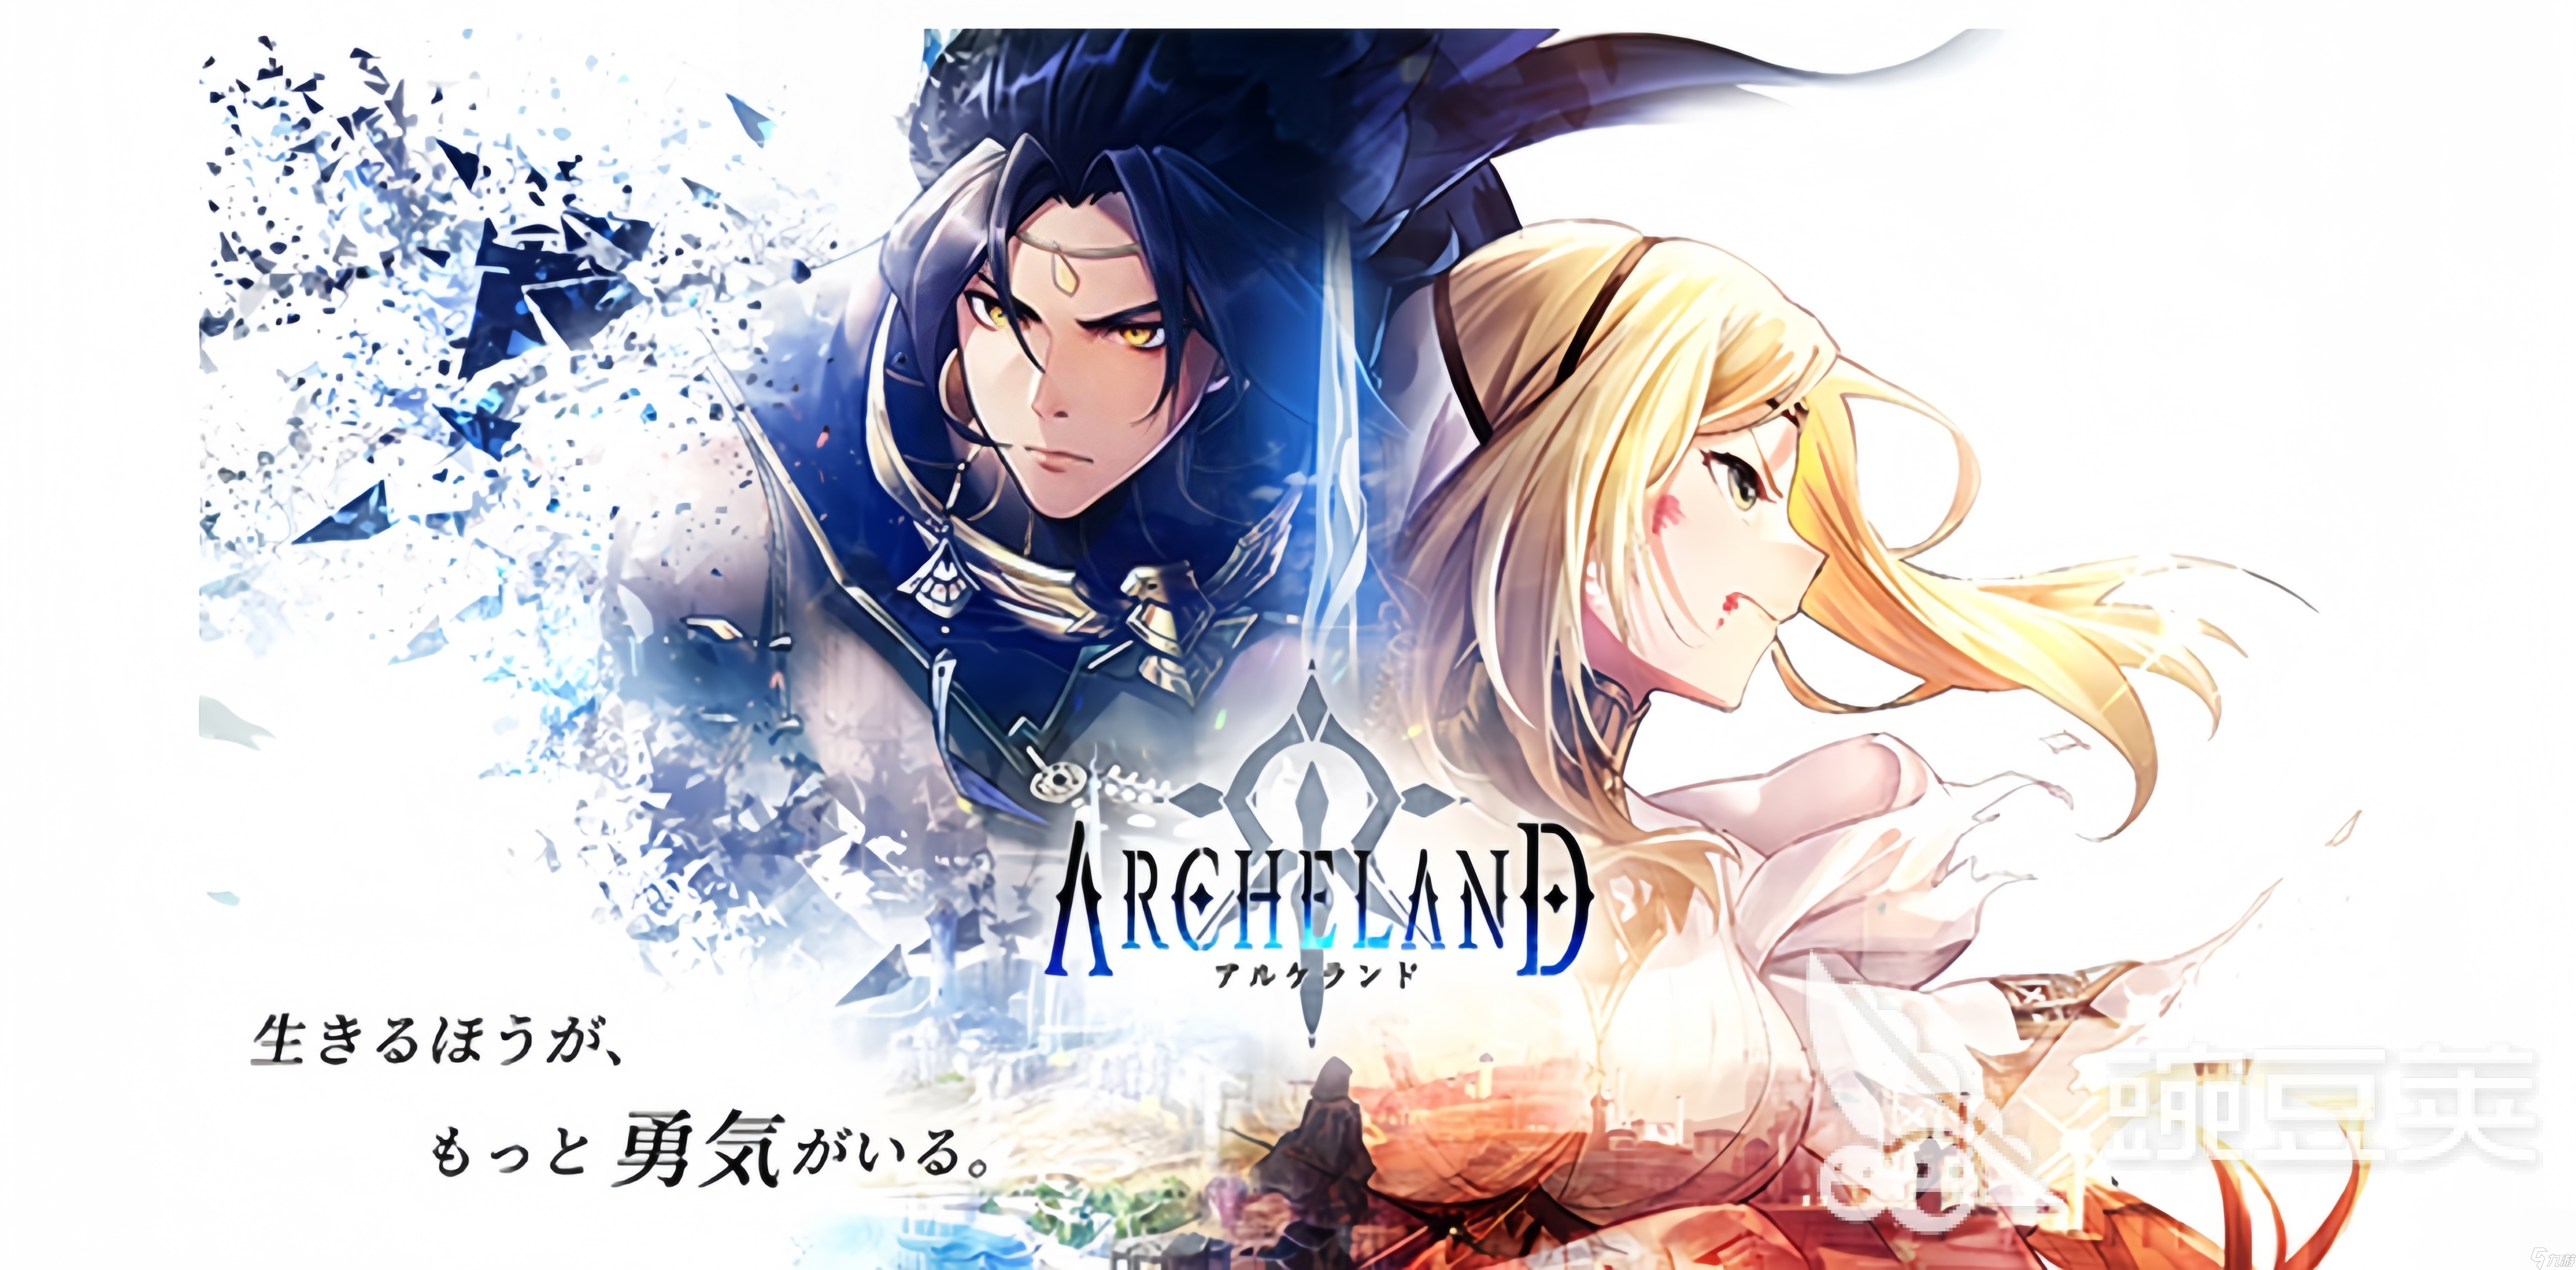 archeland下载链接 archeland最新下载地址